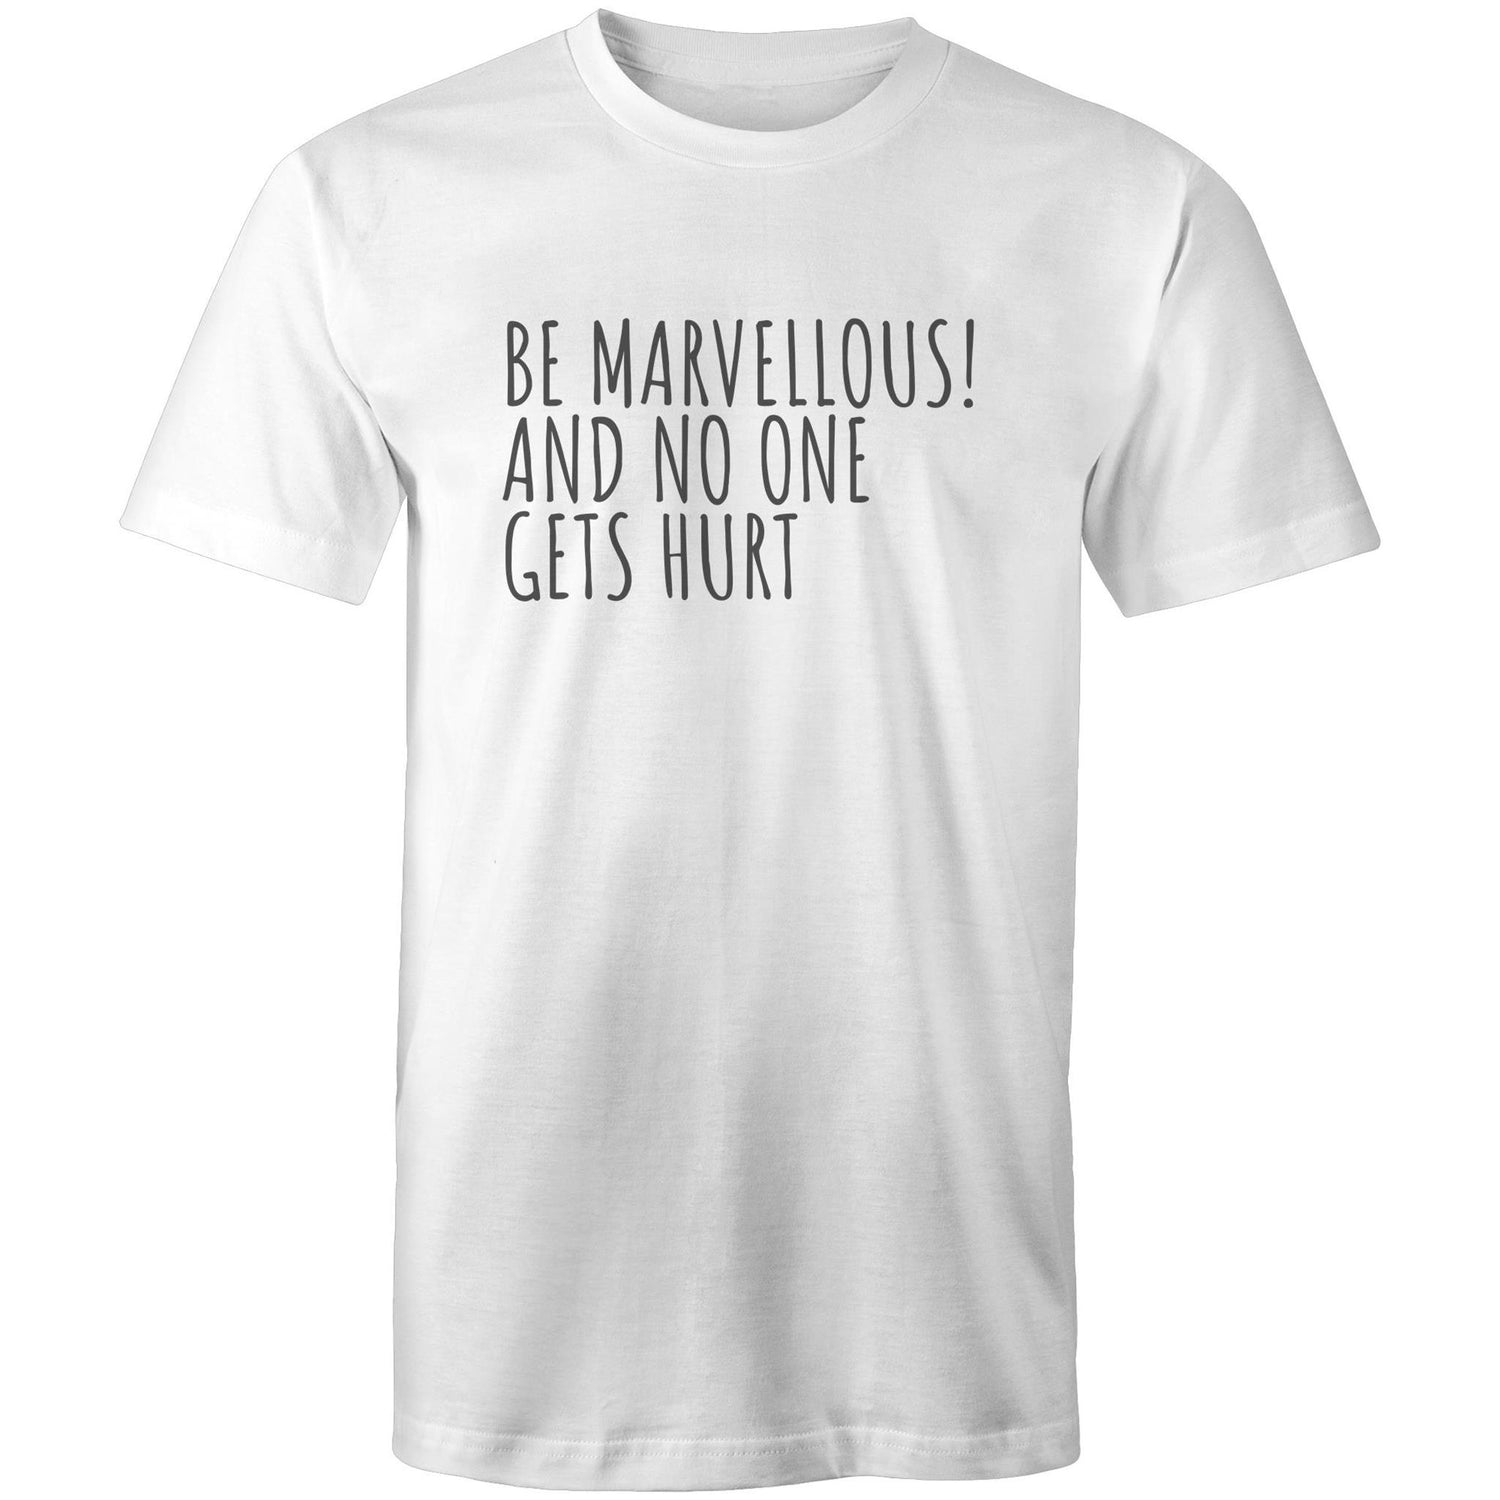 "Be Marvellous! And No One Gets Hurt" - Men's T-shirt Positive Motivational Slogan